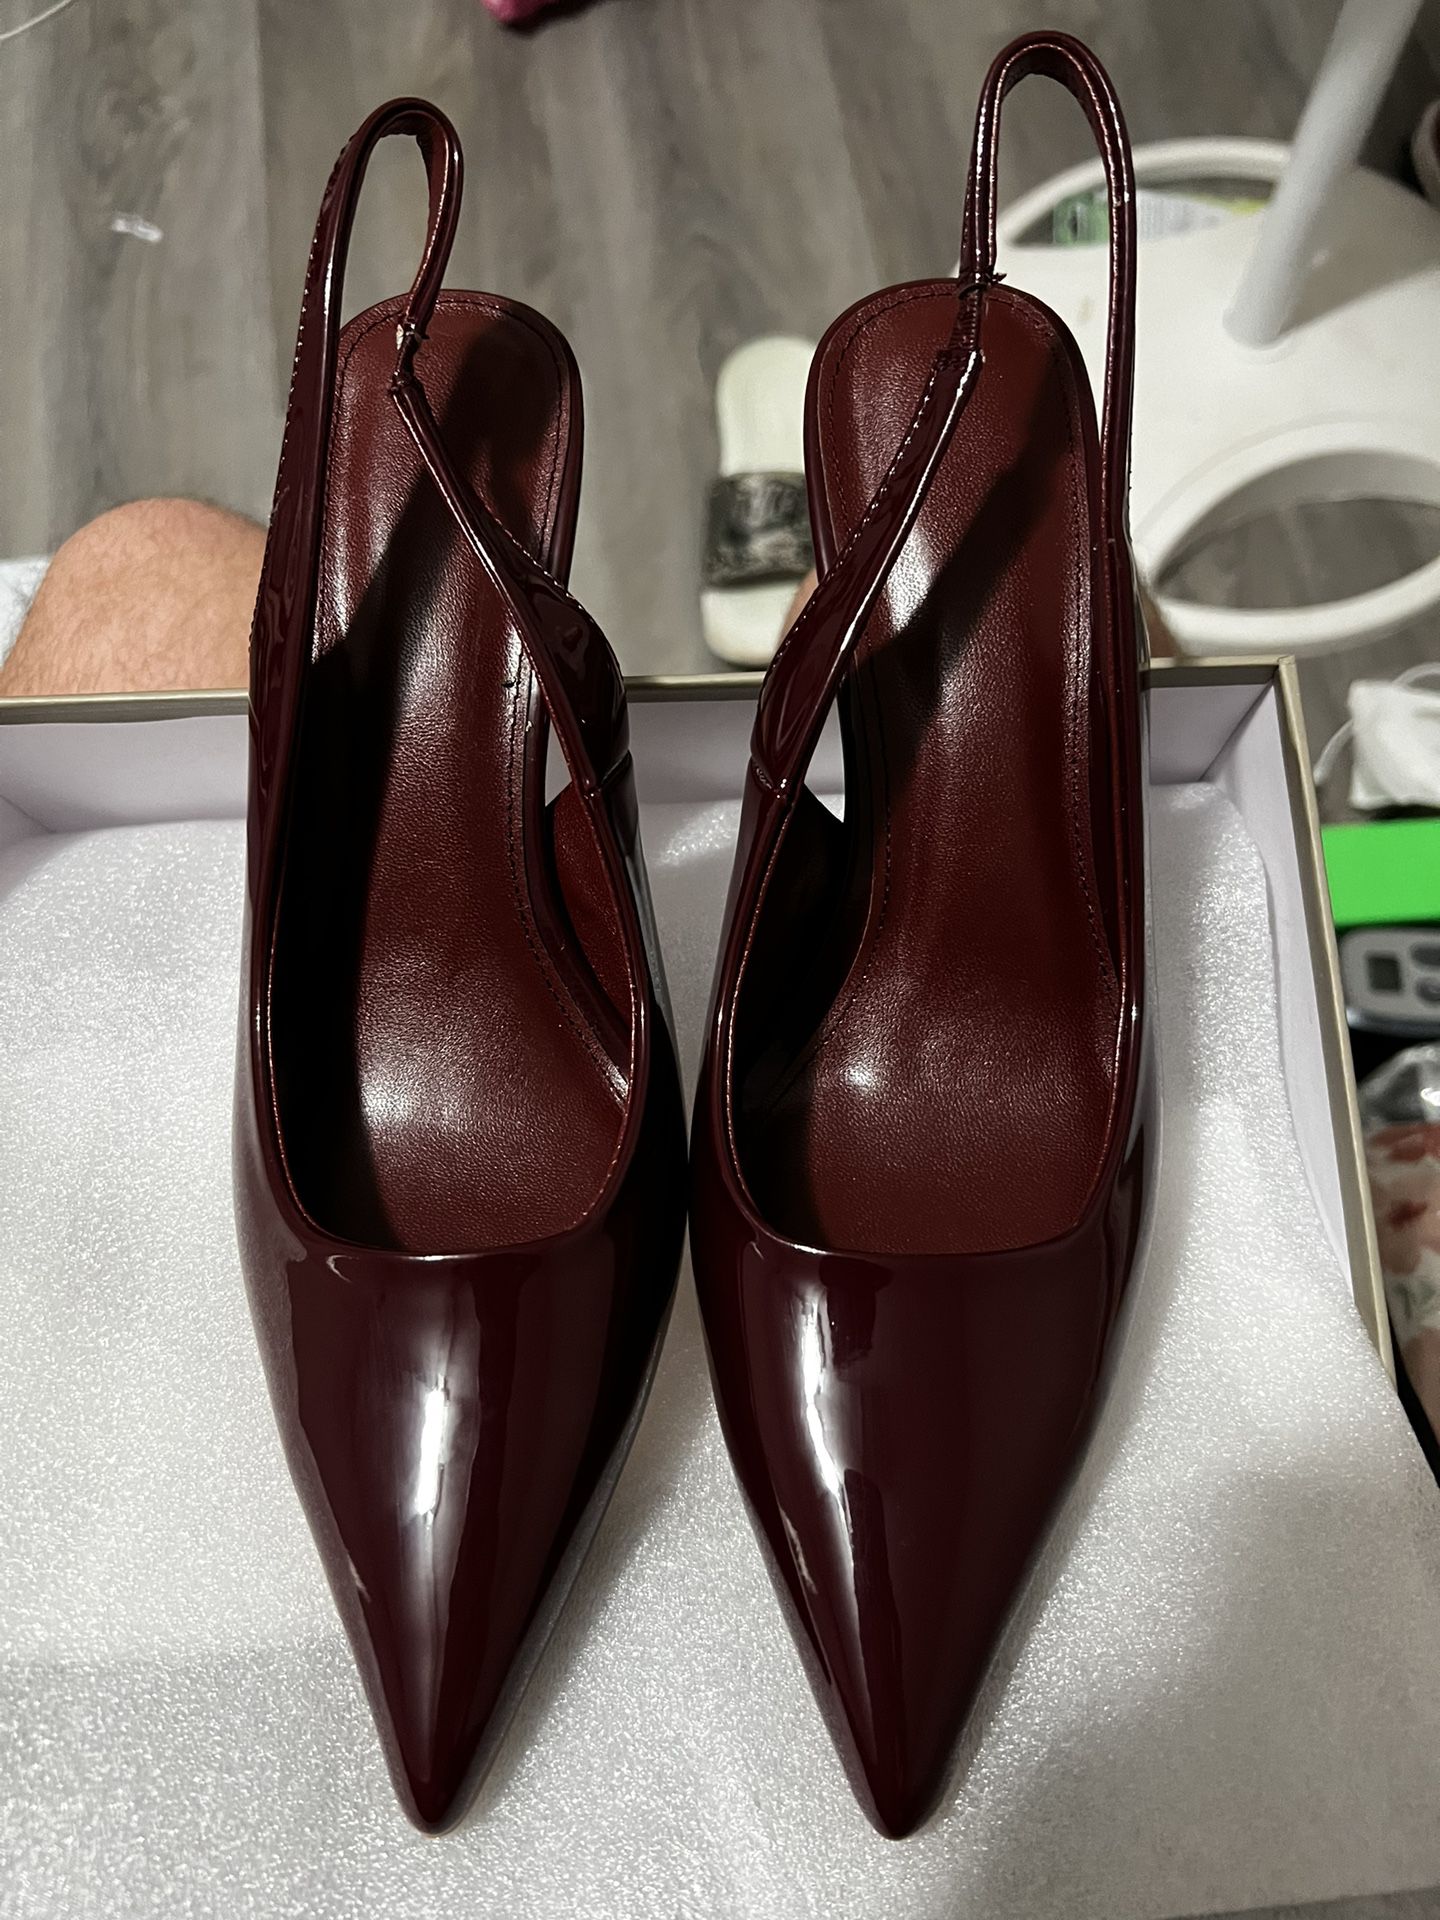 Burgundy Heels (Mango dupe)